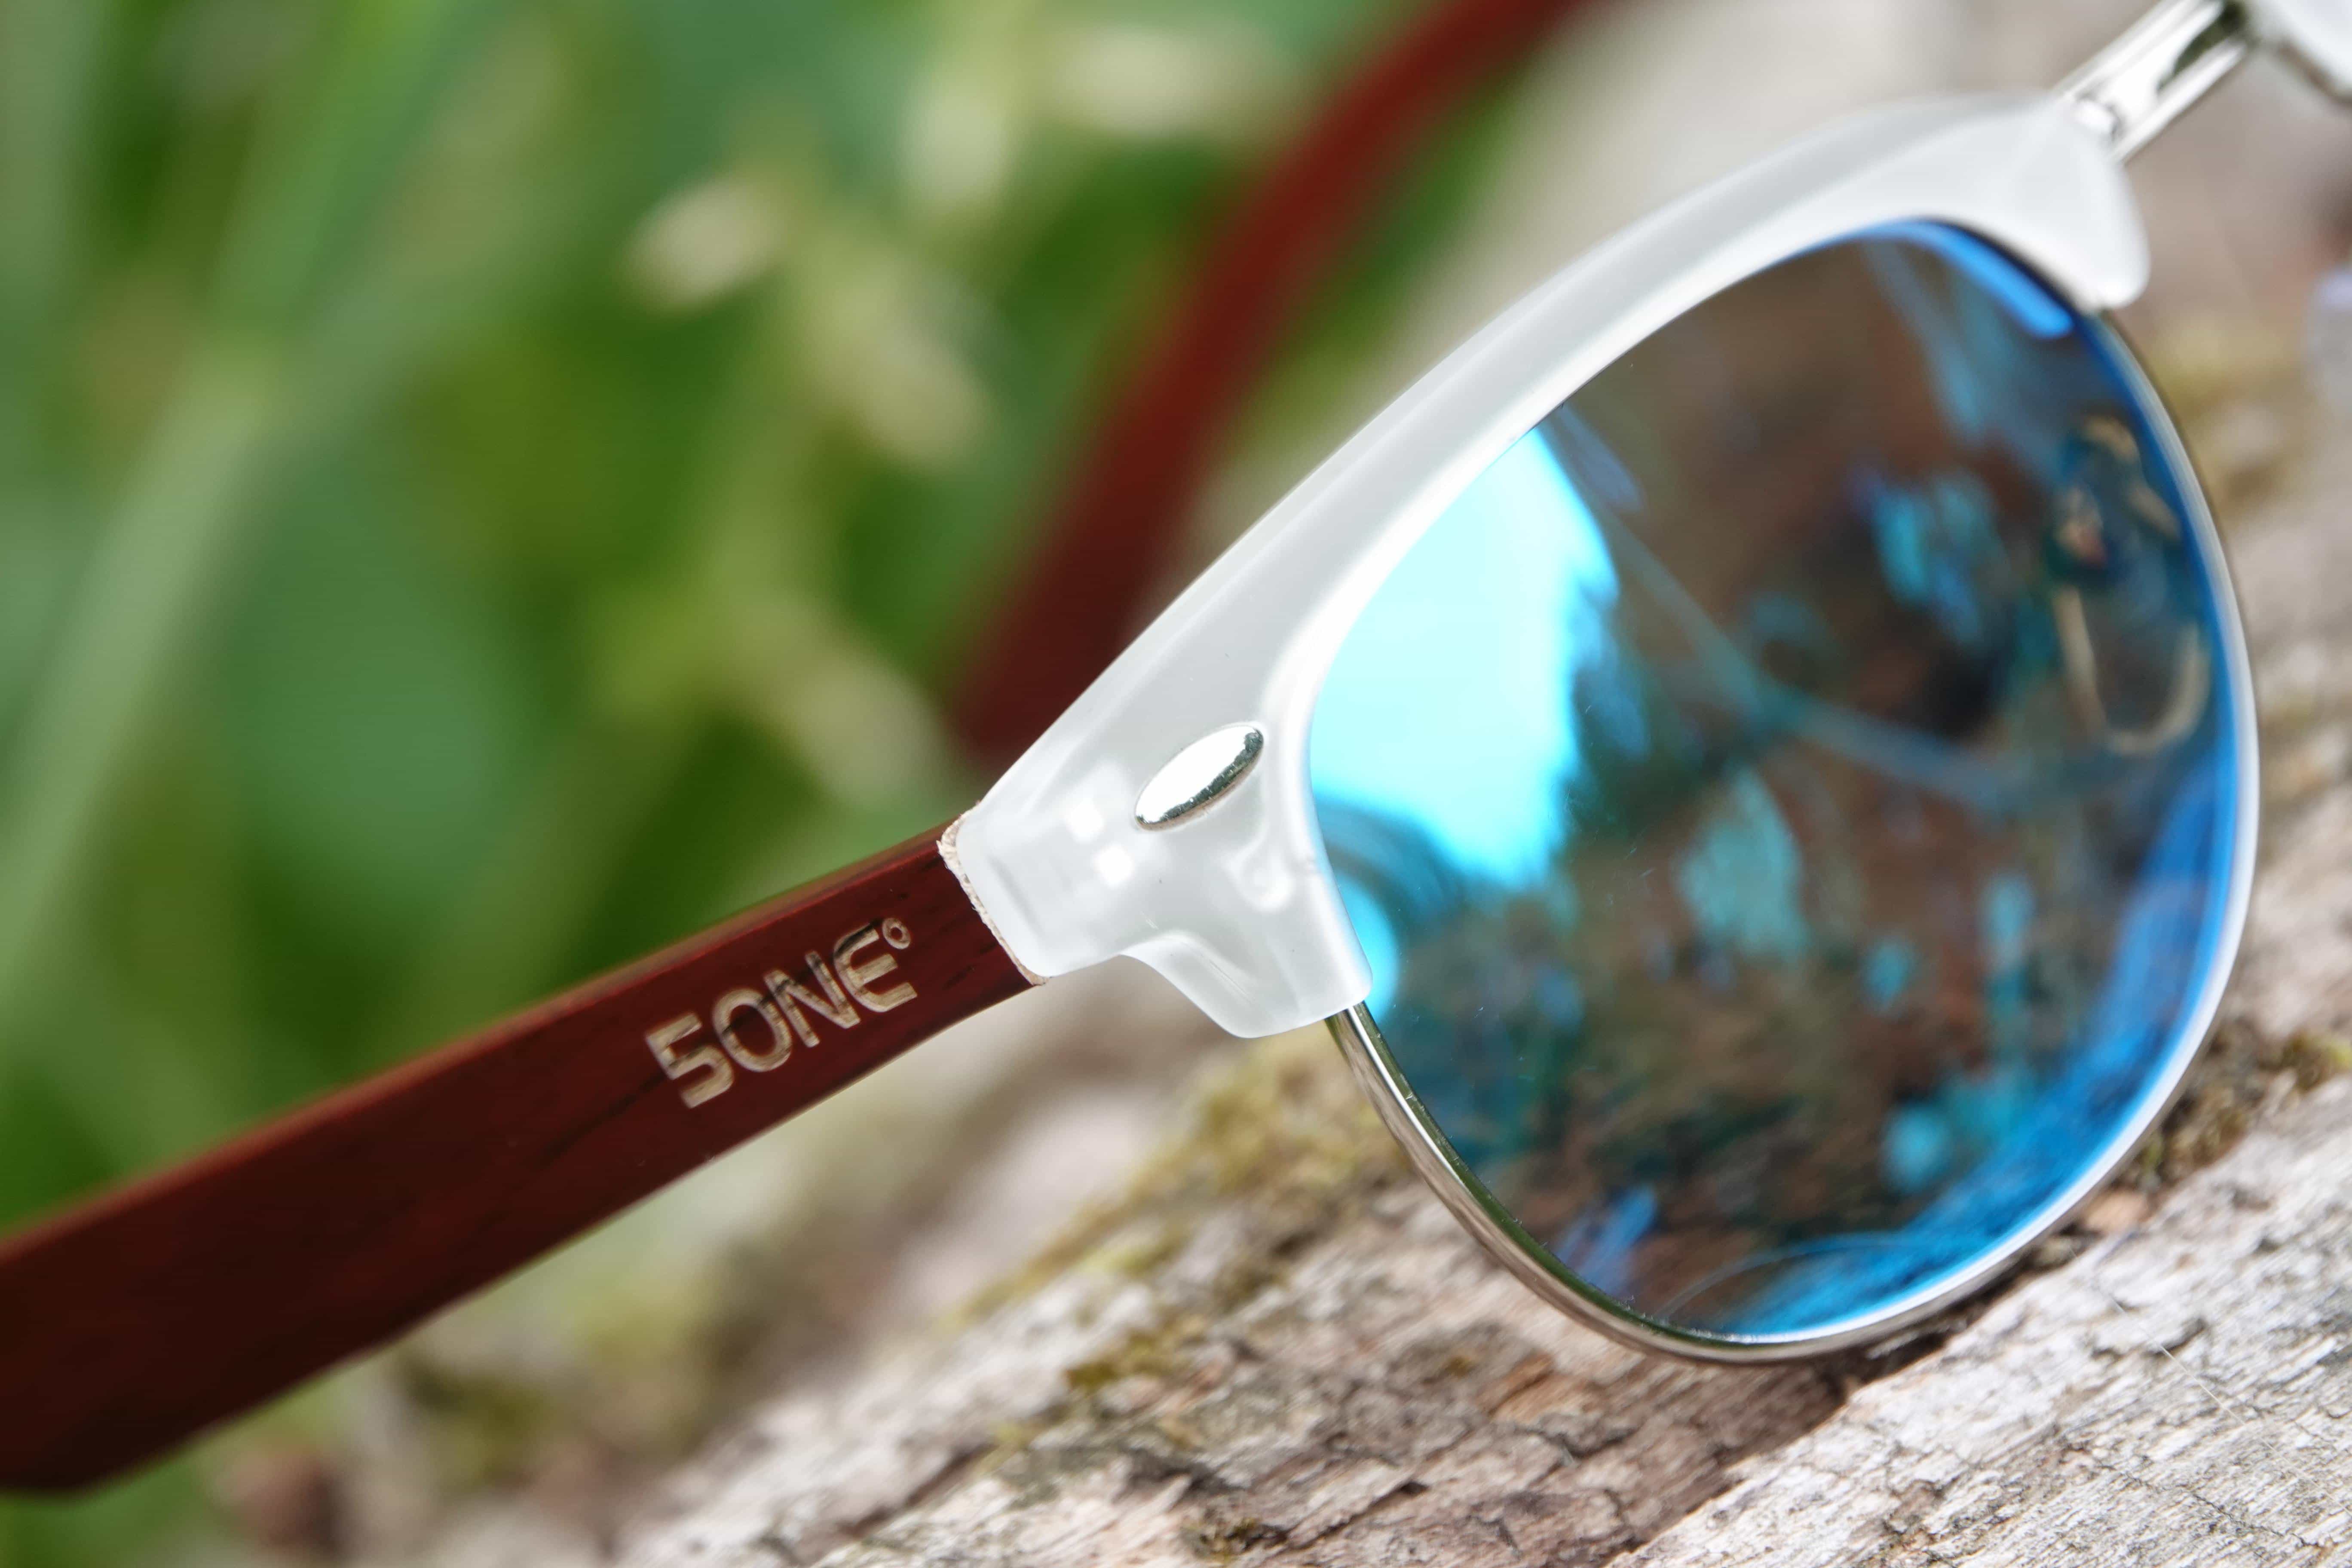 5one® Capri Blue - blauwe lens - transparant frame - clubmastermodel